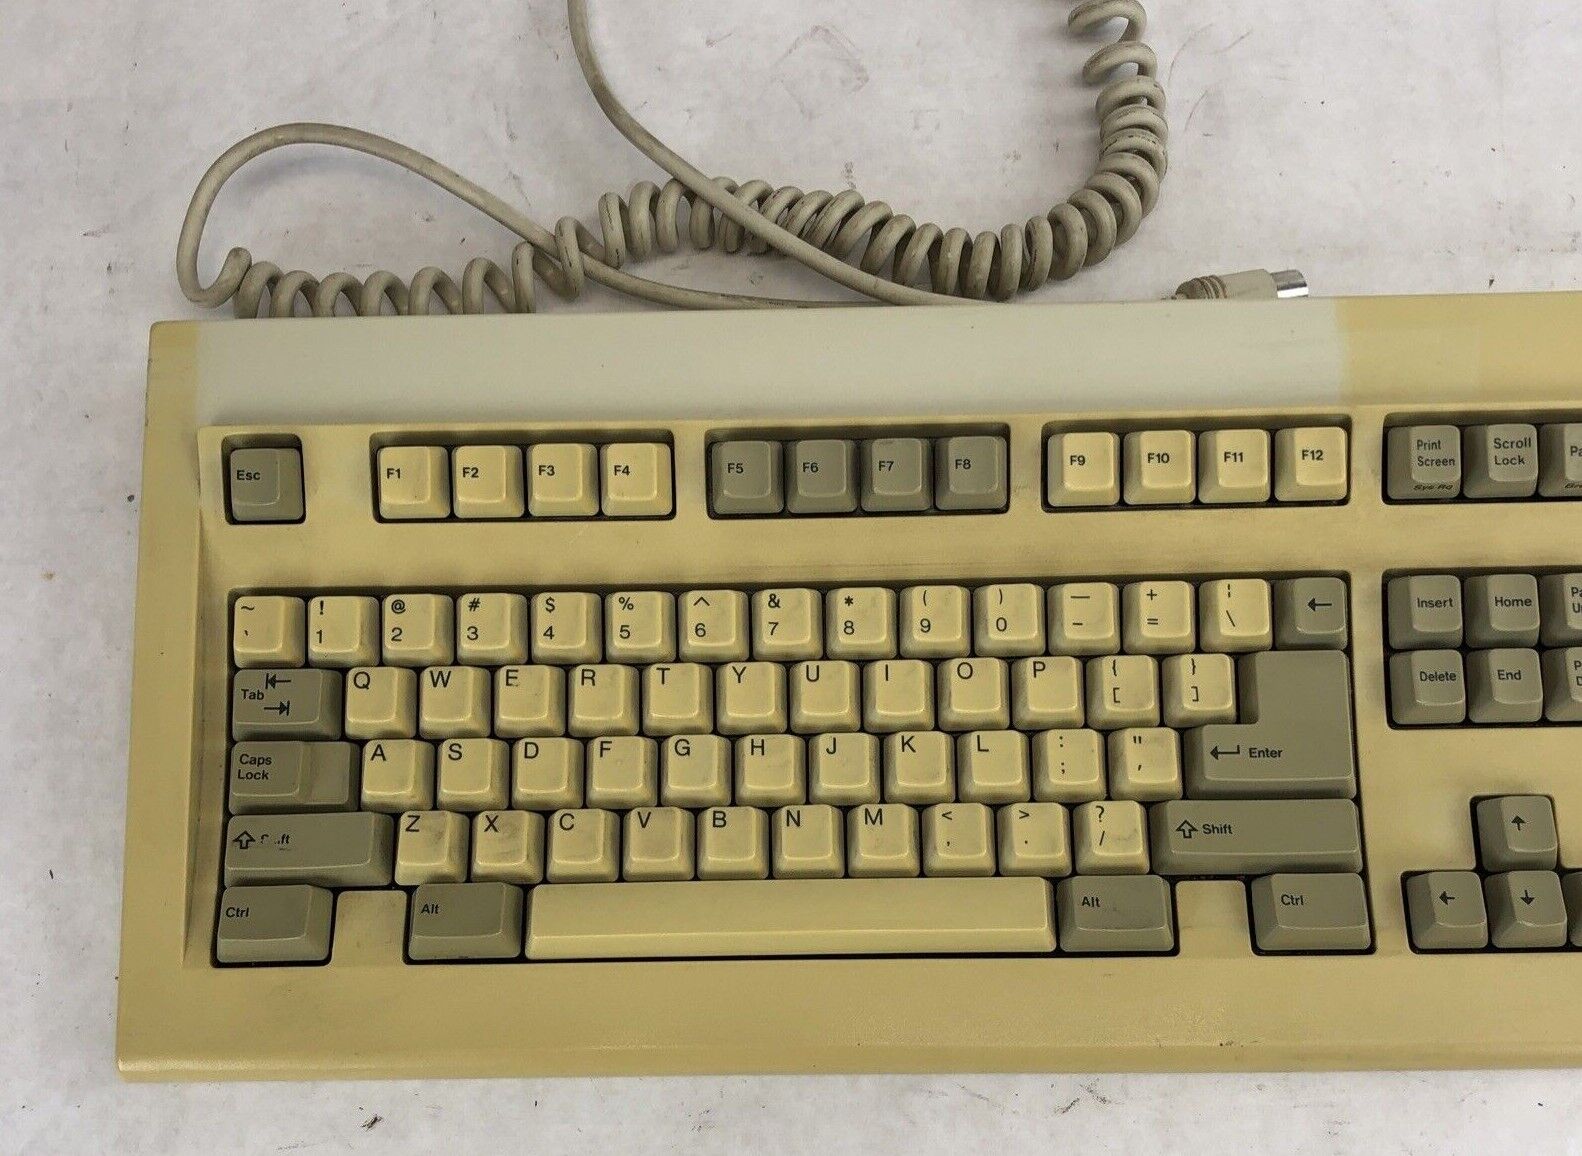 Vintage Mitsumi Electric KPQ-E99YC Wired Keyboard